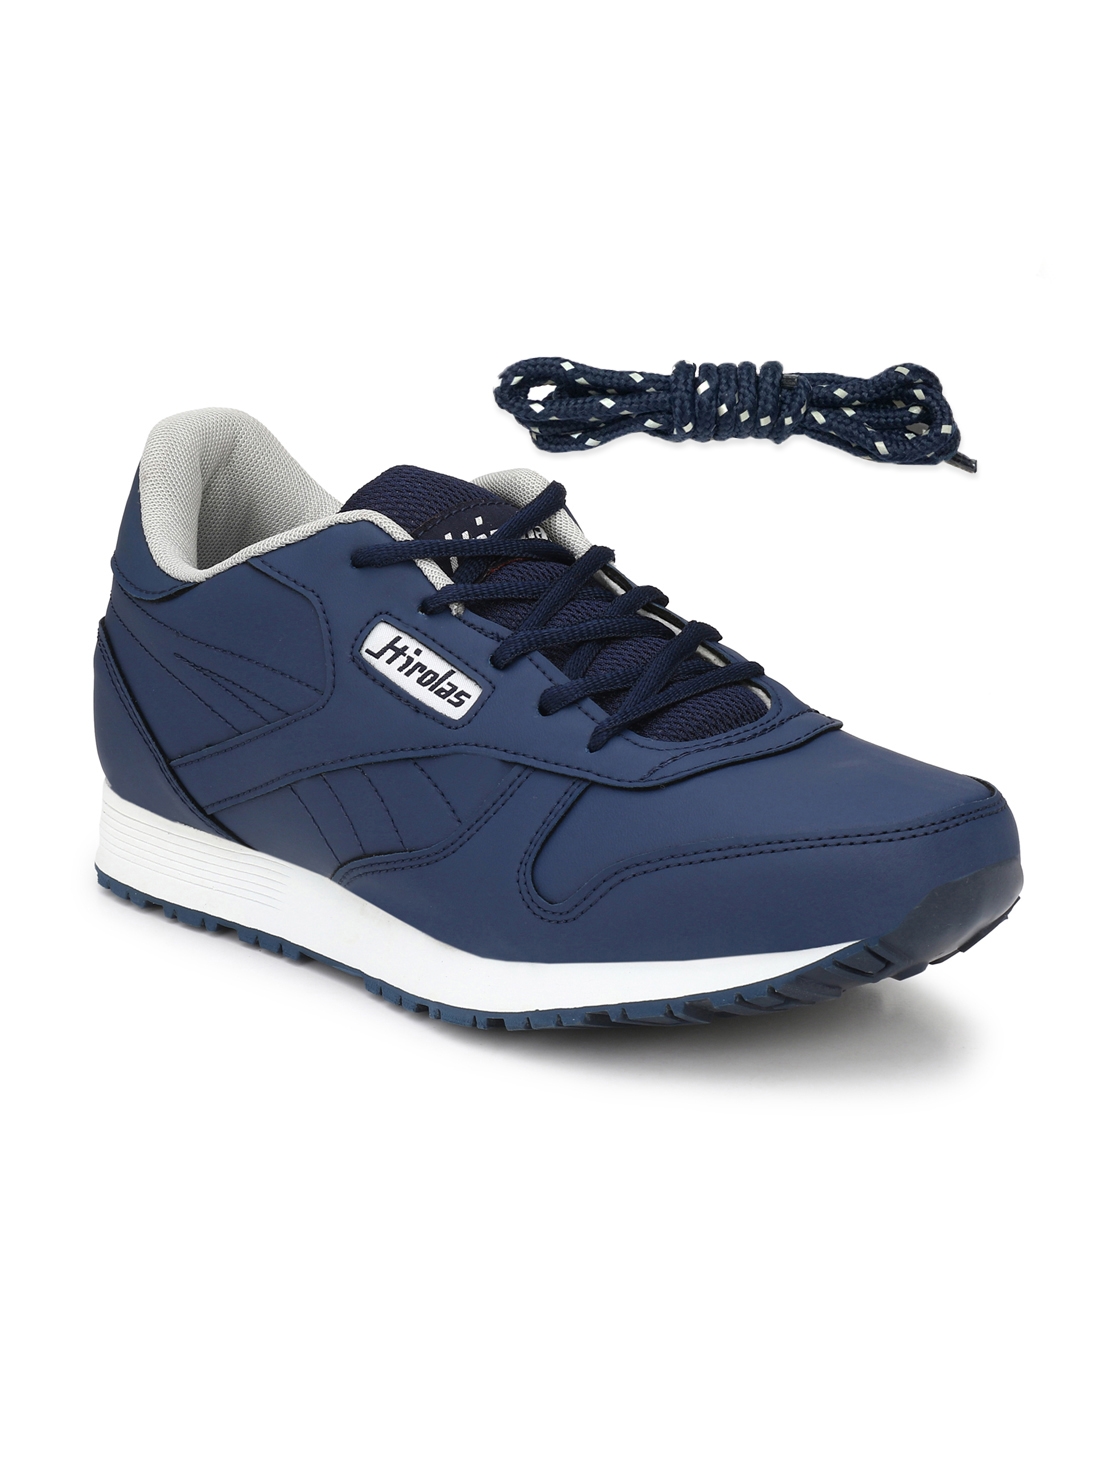 Hirolas | Hirolas Multi Sport Shock Absorbing Walking  Running Fitness Athletic Training Gym Sneaker Shoes - Blue 0